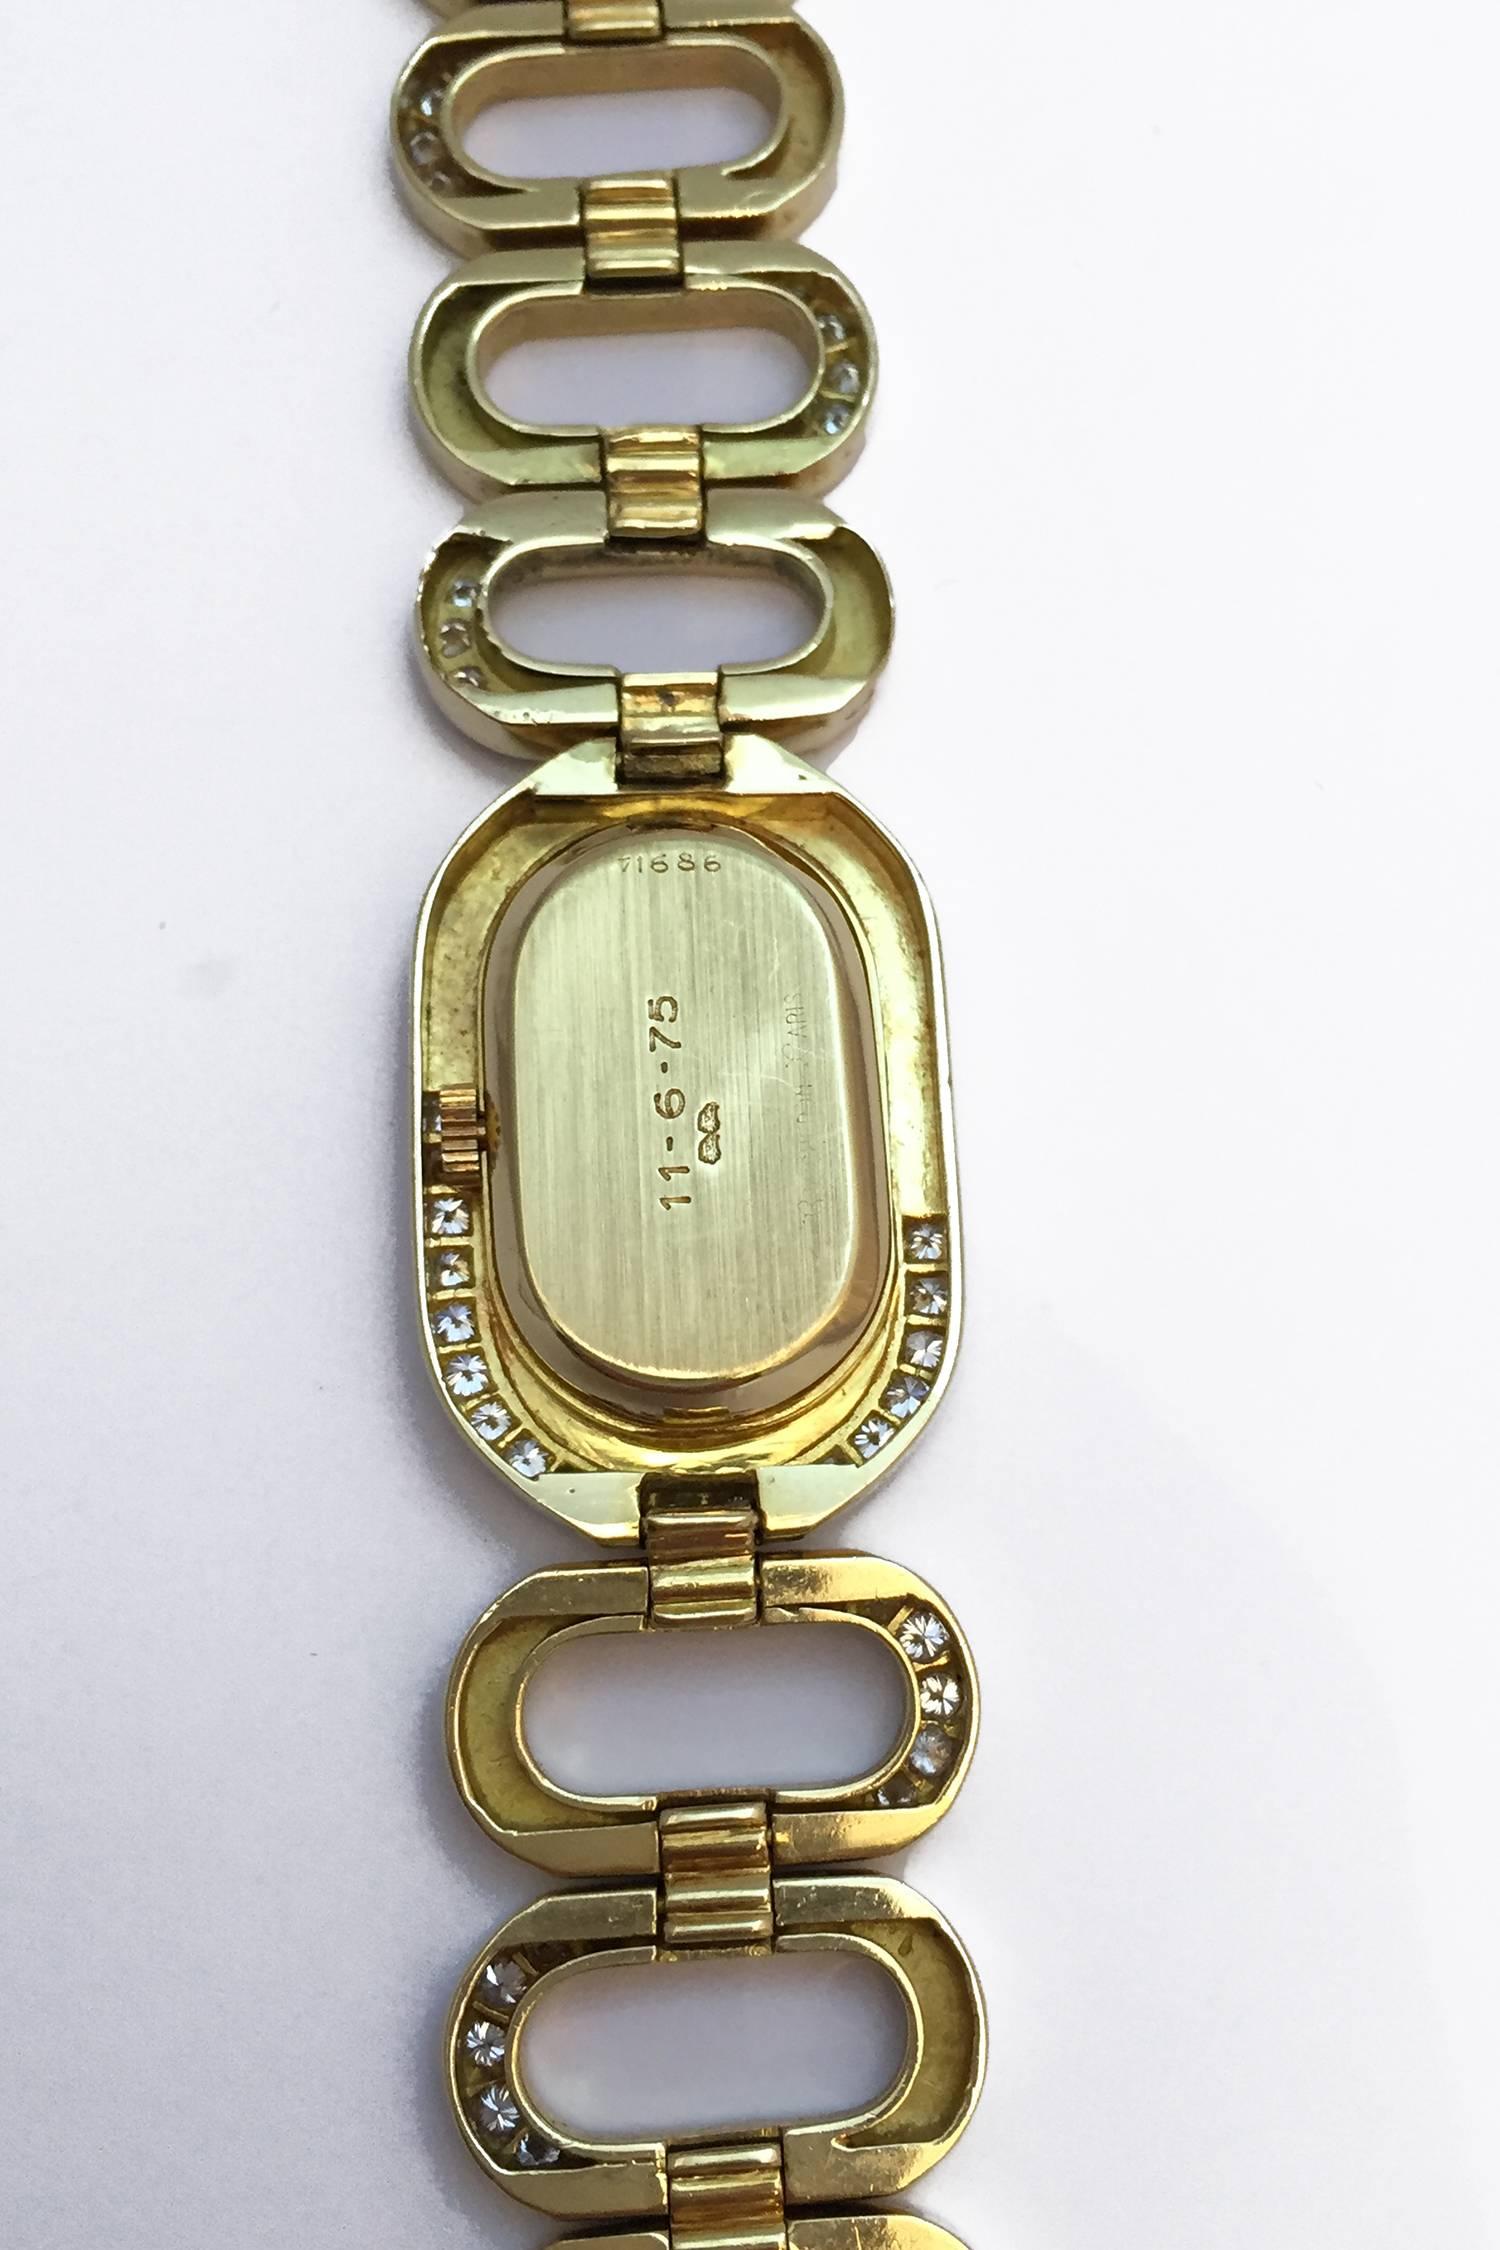 Contemporary Boucheron Lady's Yellow Gold and Diamond Bracelet Watch circa 1970s